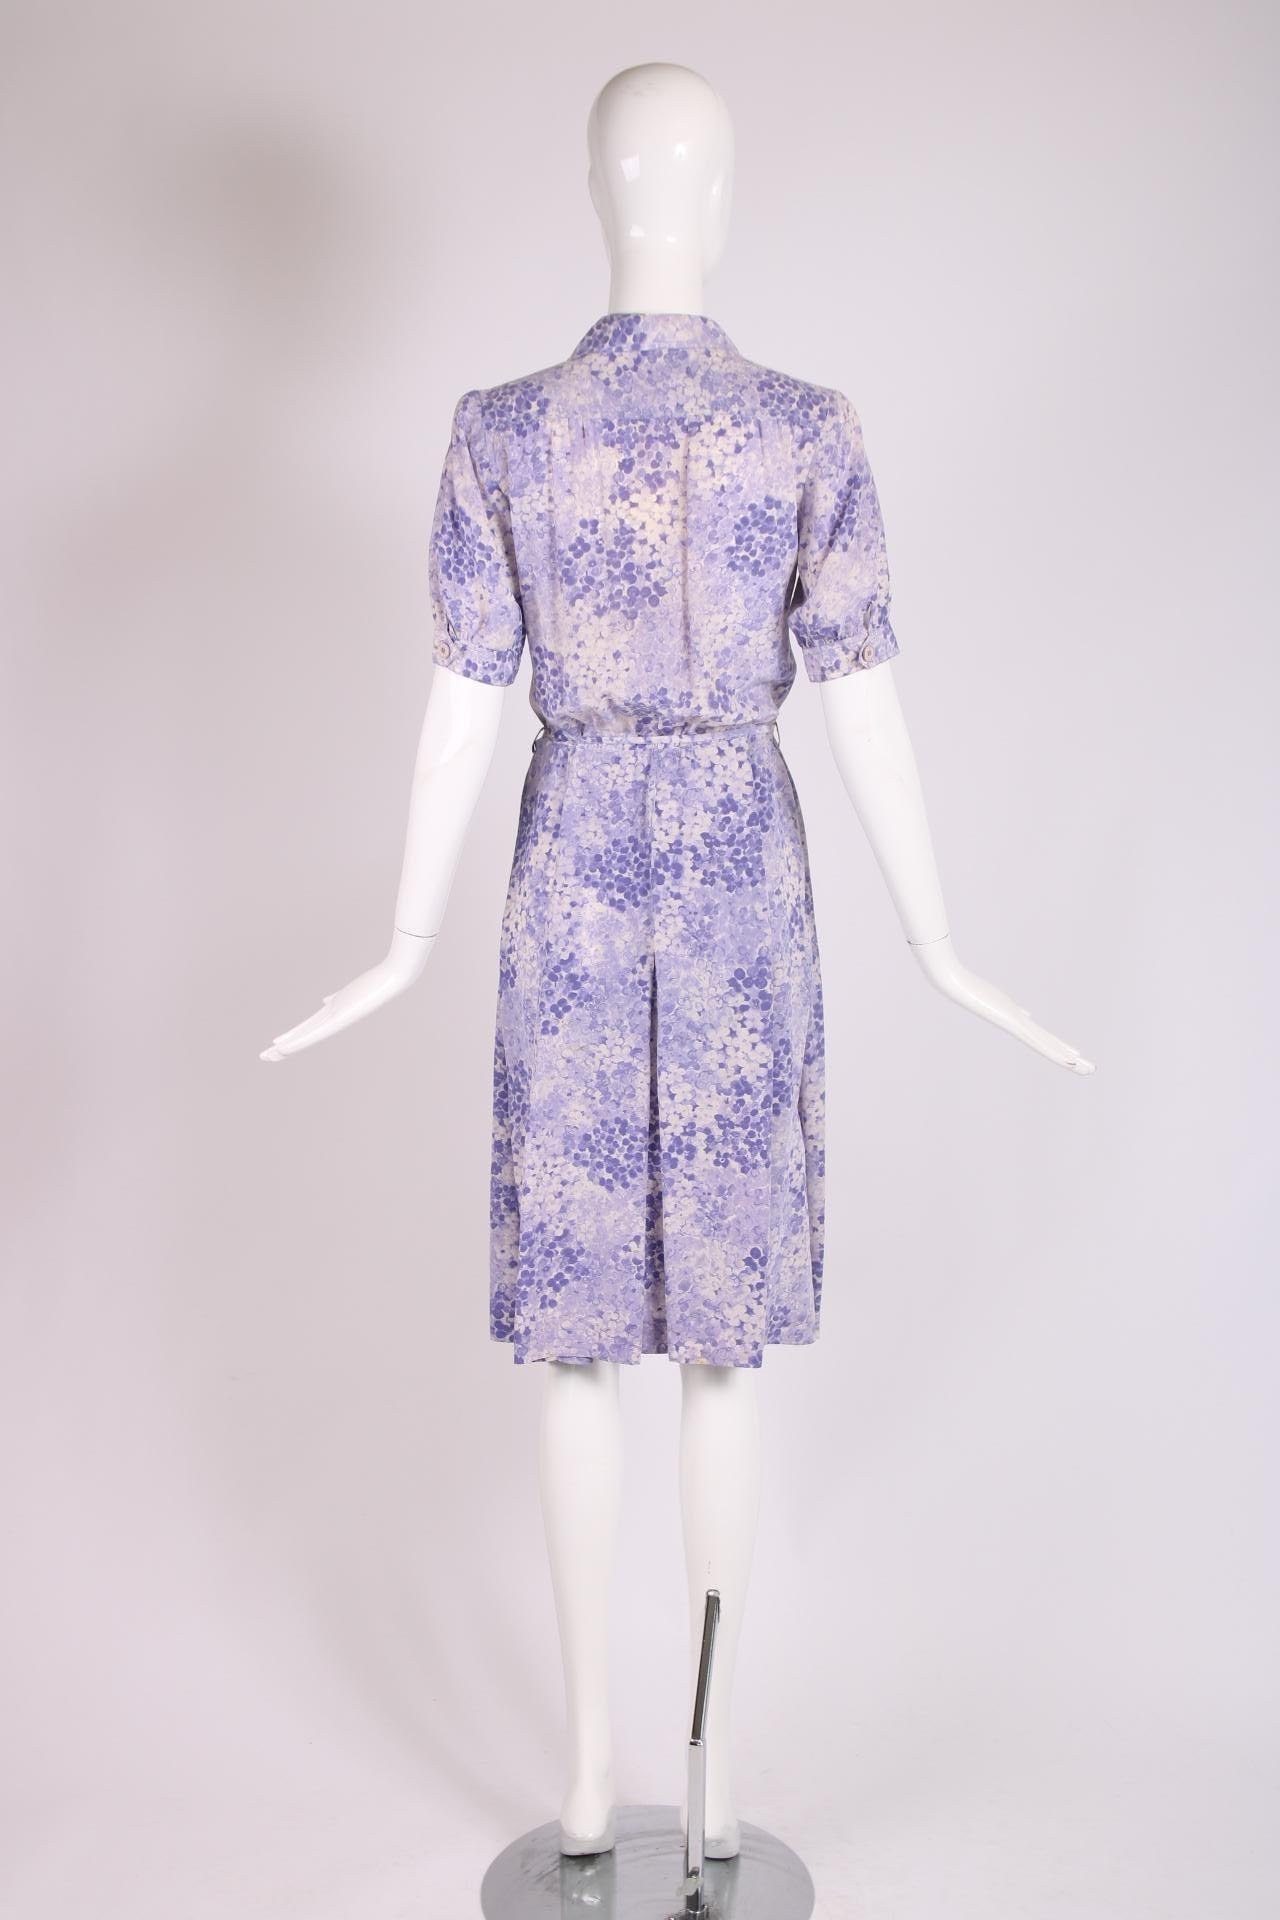 Yves Saint Laurent Purple Floral Silk Day Dress 1970's For Sale 1